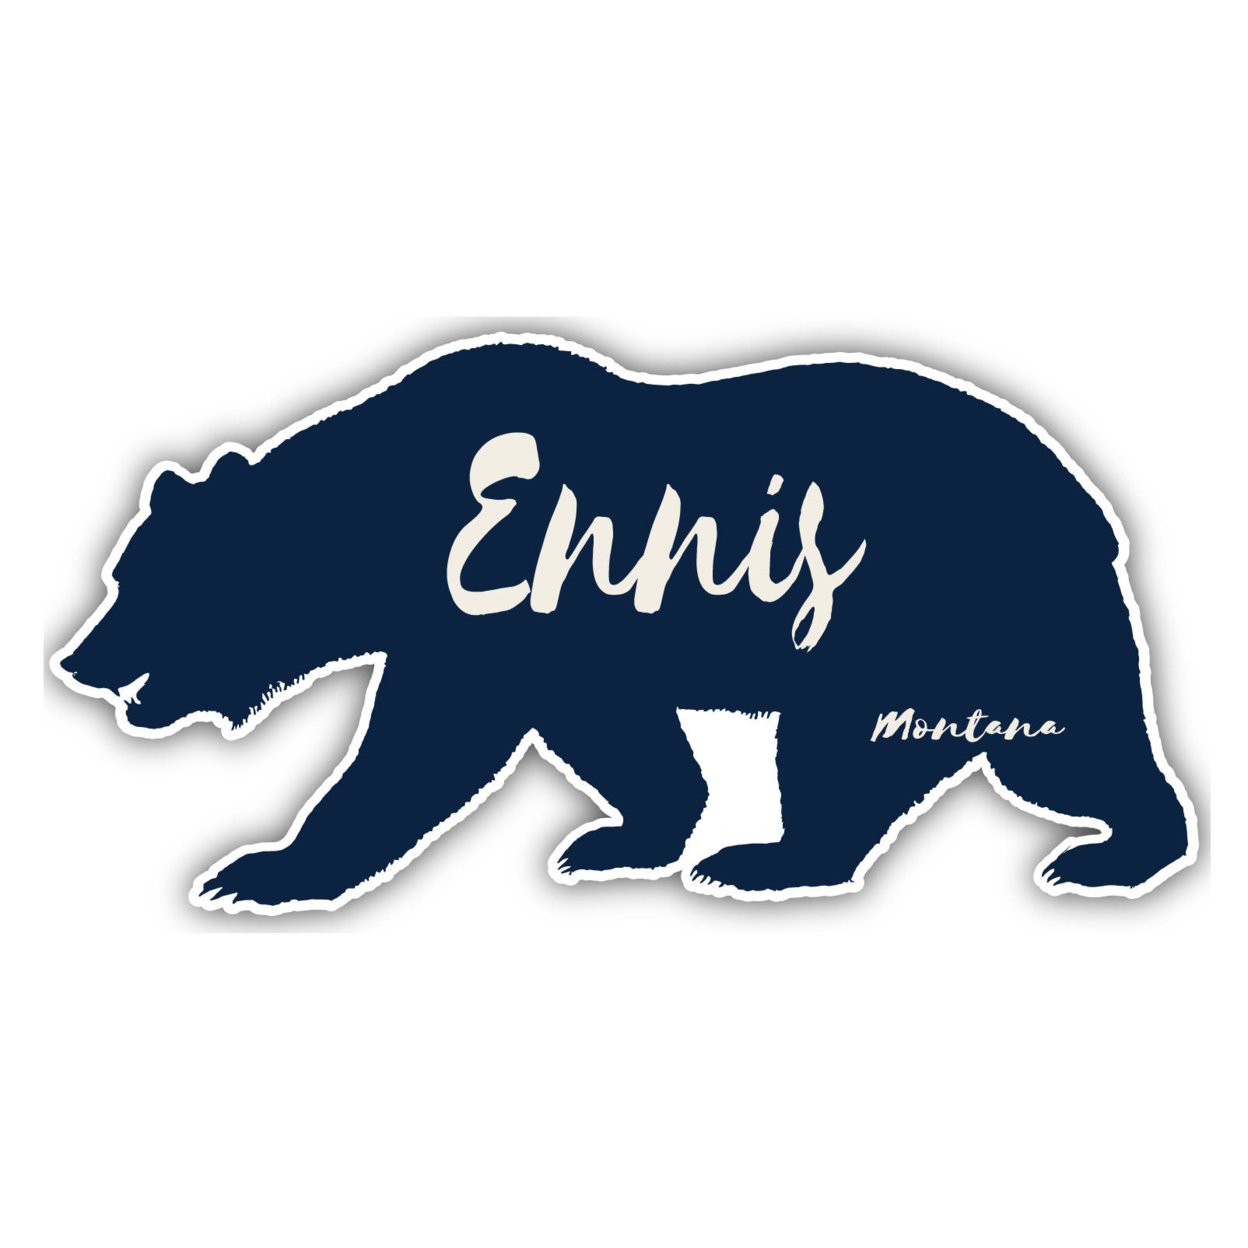 Ennis Montana Souvenir Decorative Stickers (Choose Theme And Size) - Single Unit, 10-Inch, Great Outdoors